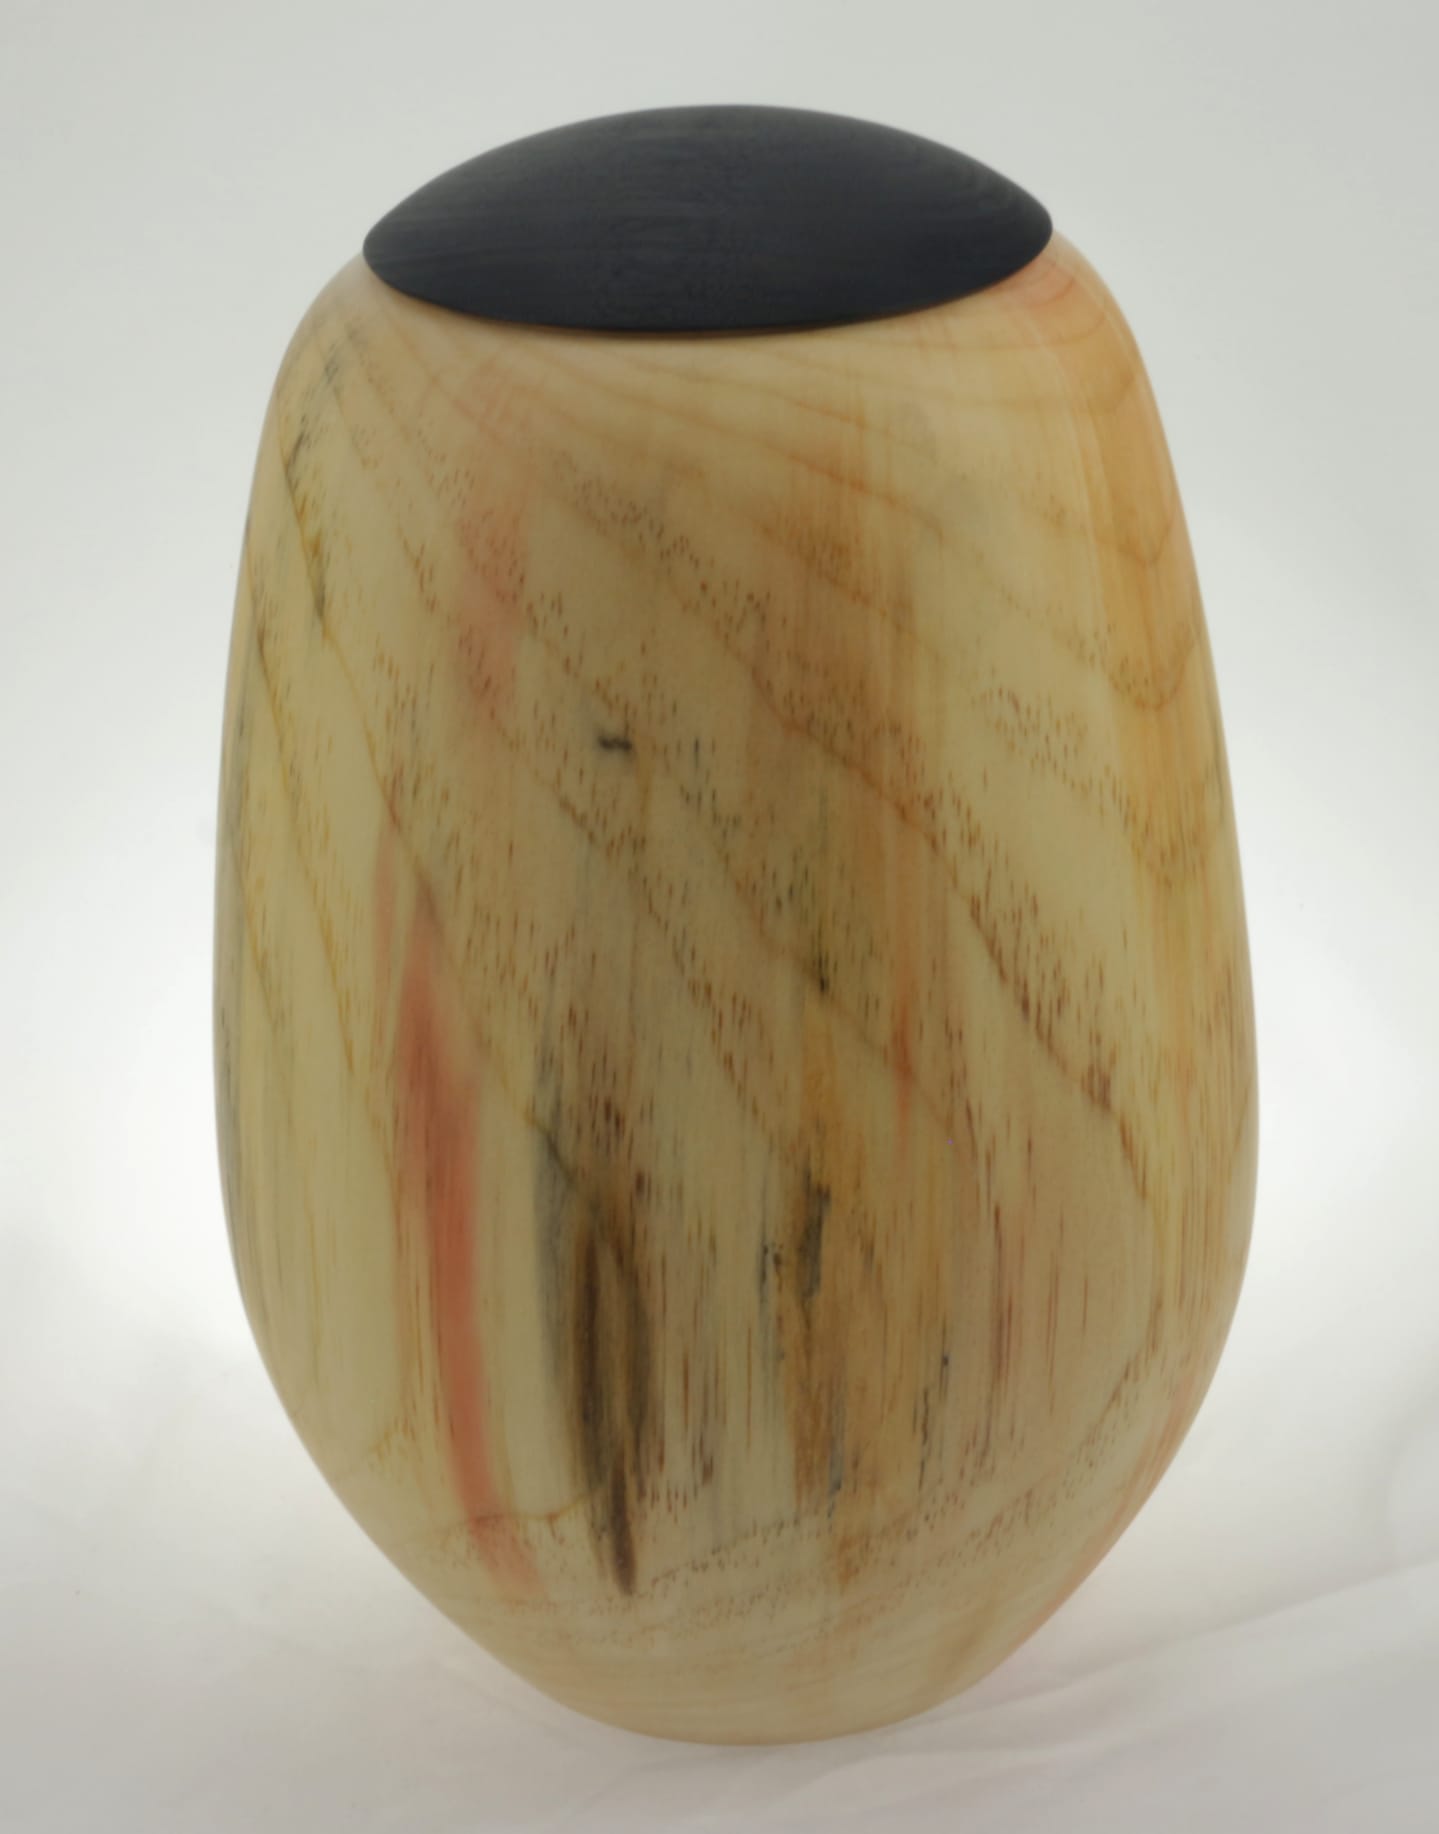 Wood cremation urn - #133-Pine 7.25 x 10in.